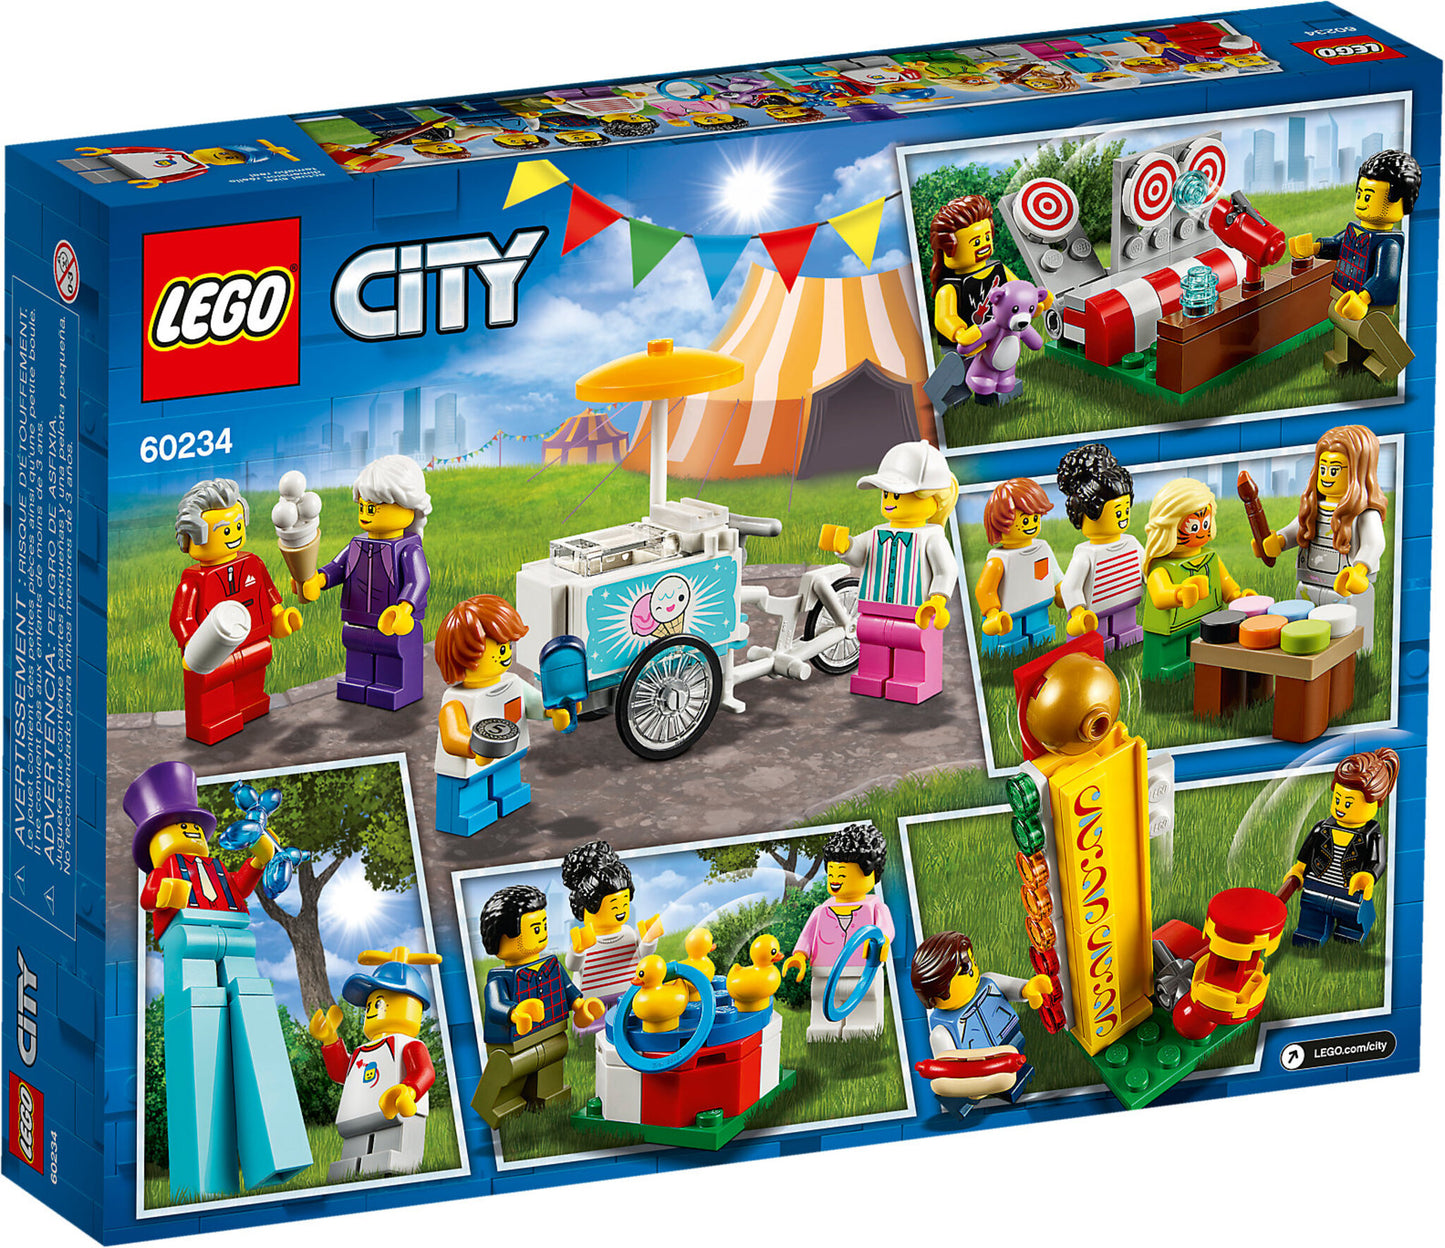 60234 LEGO City - People Pack: Luna Park